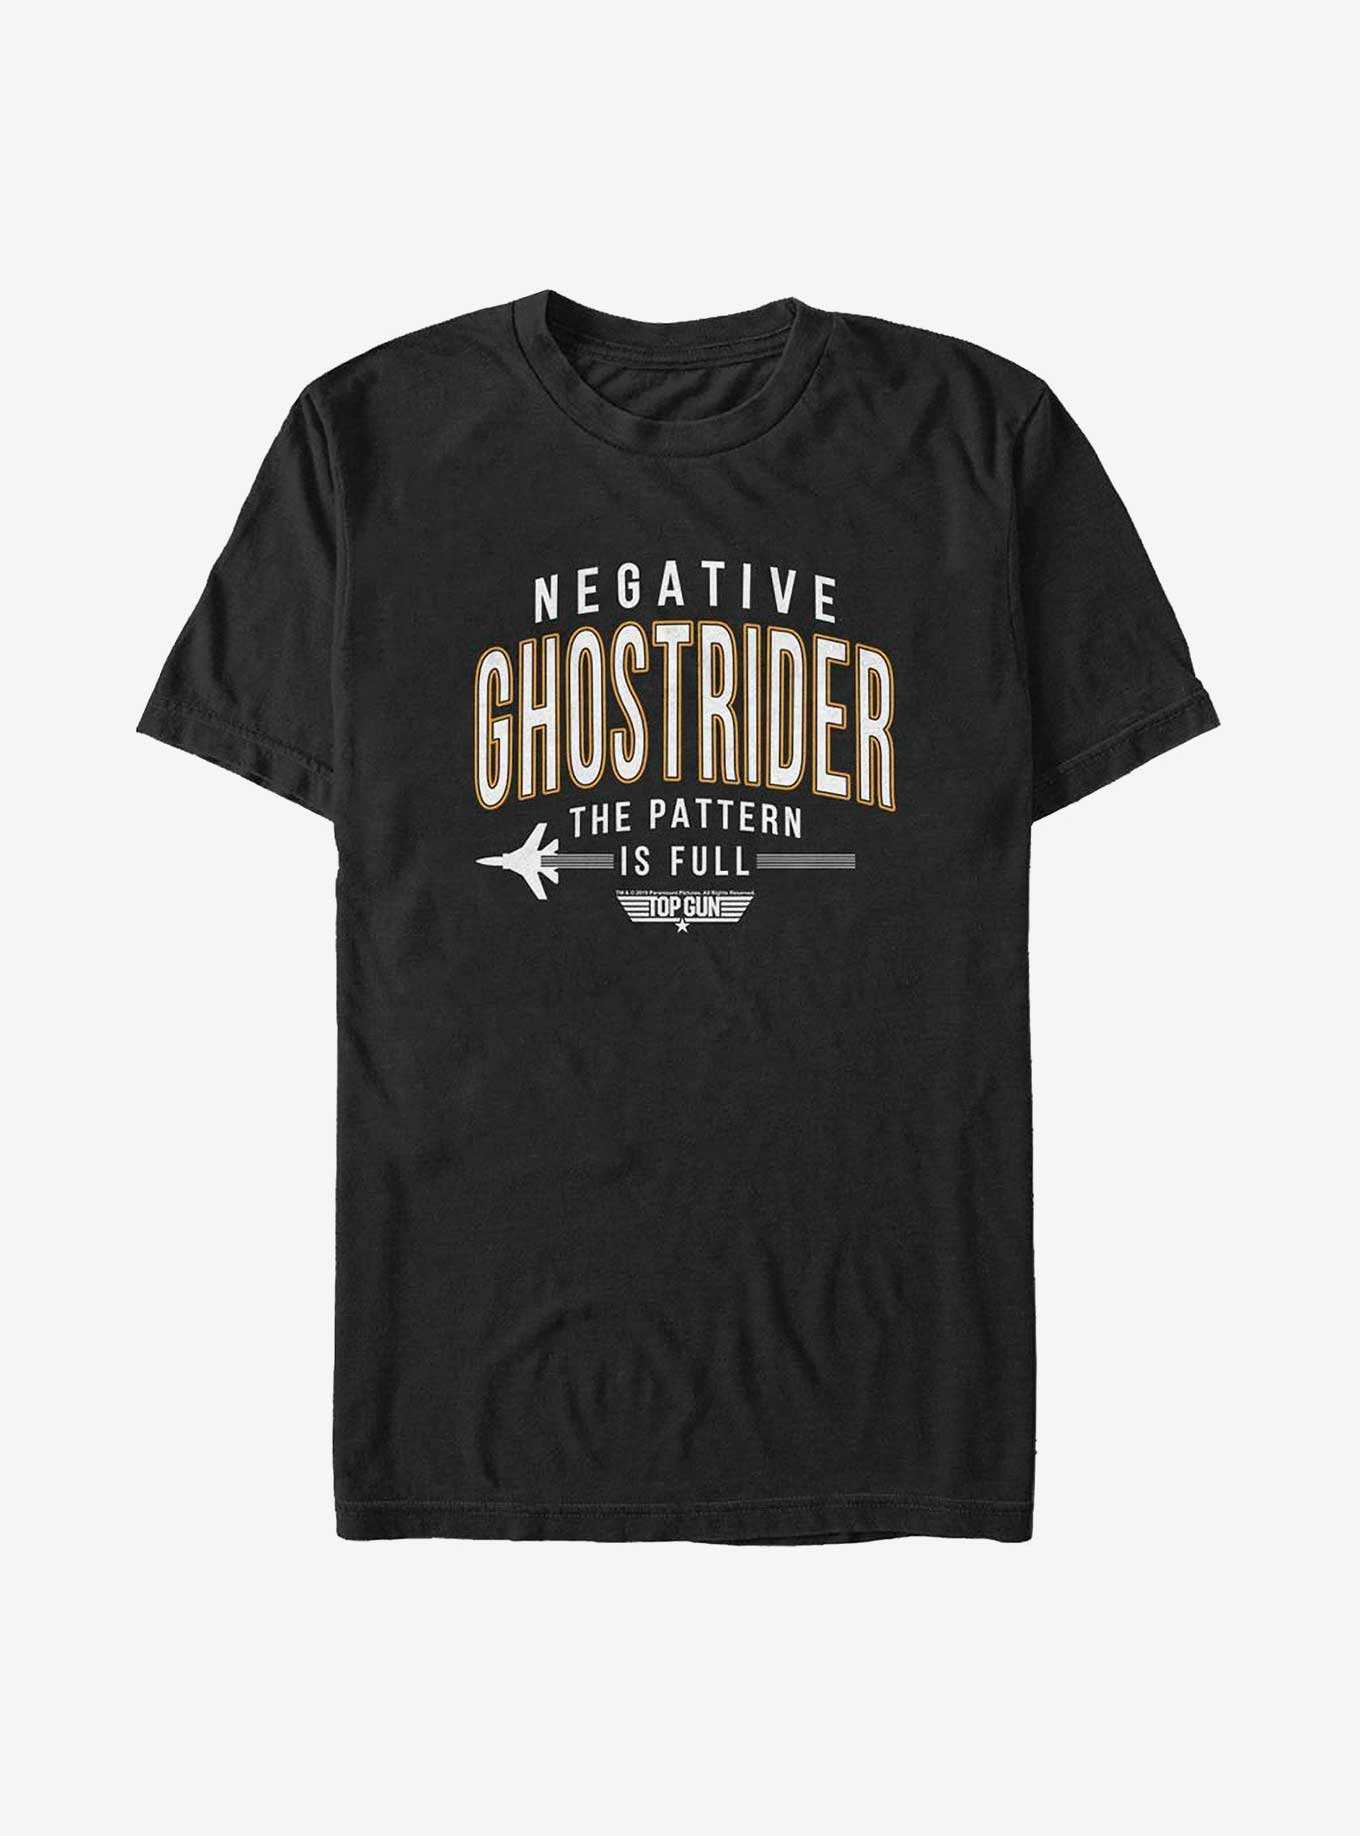 Top Gun Negative Ghostrider Big & Tall T-Shirt, , hi-res